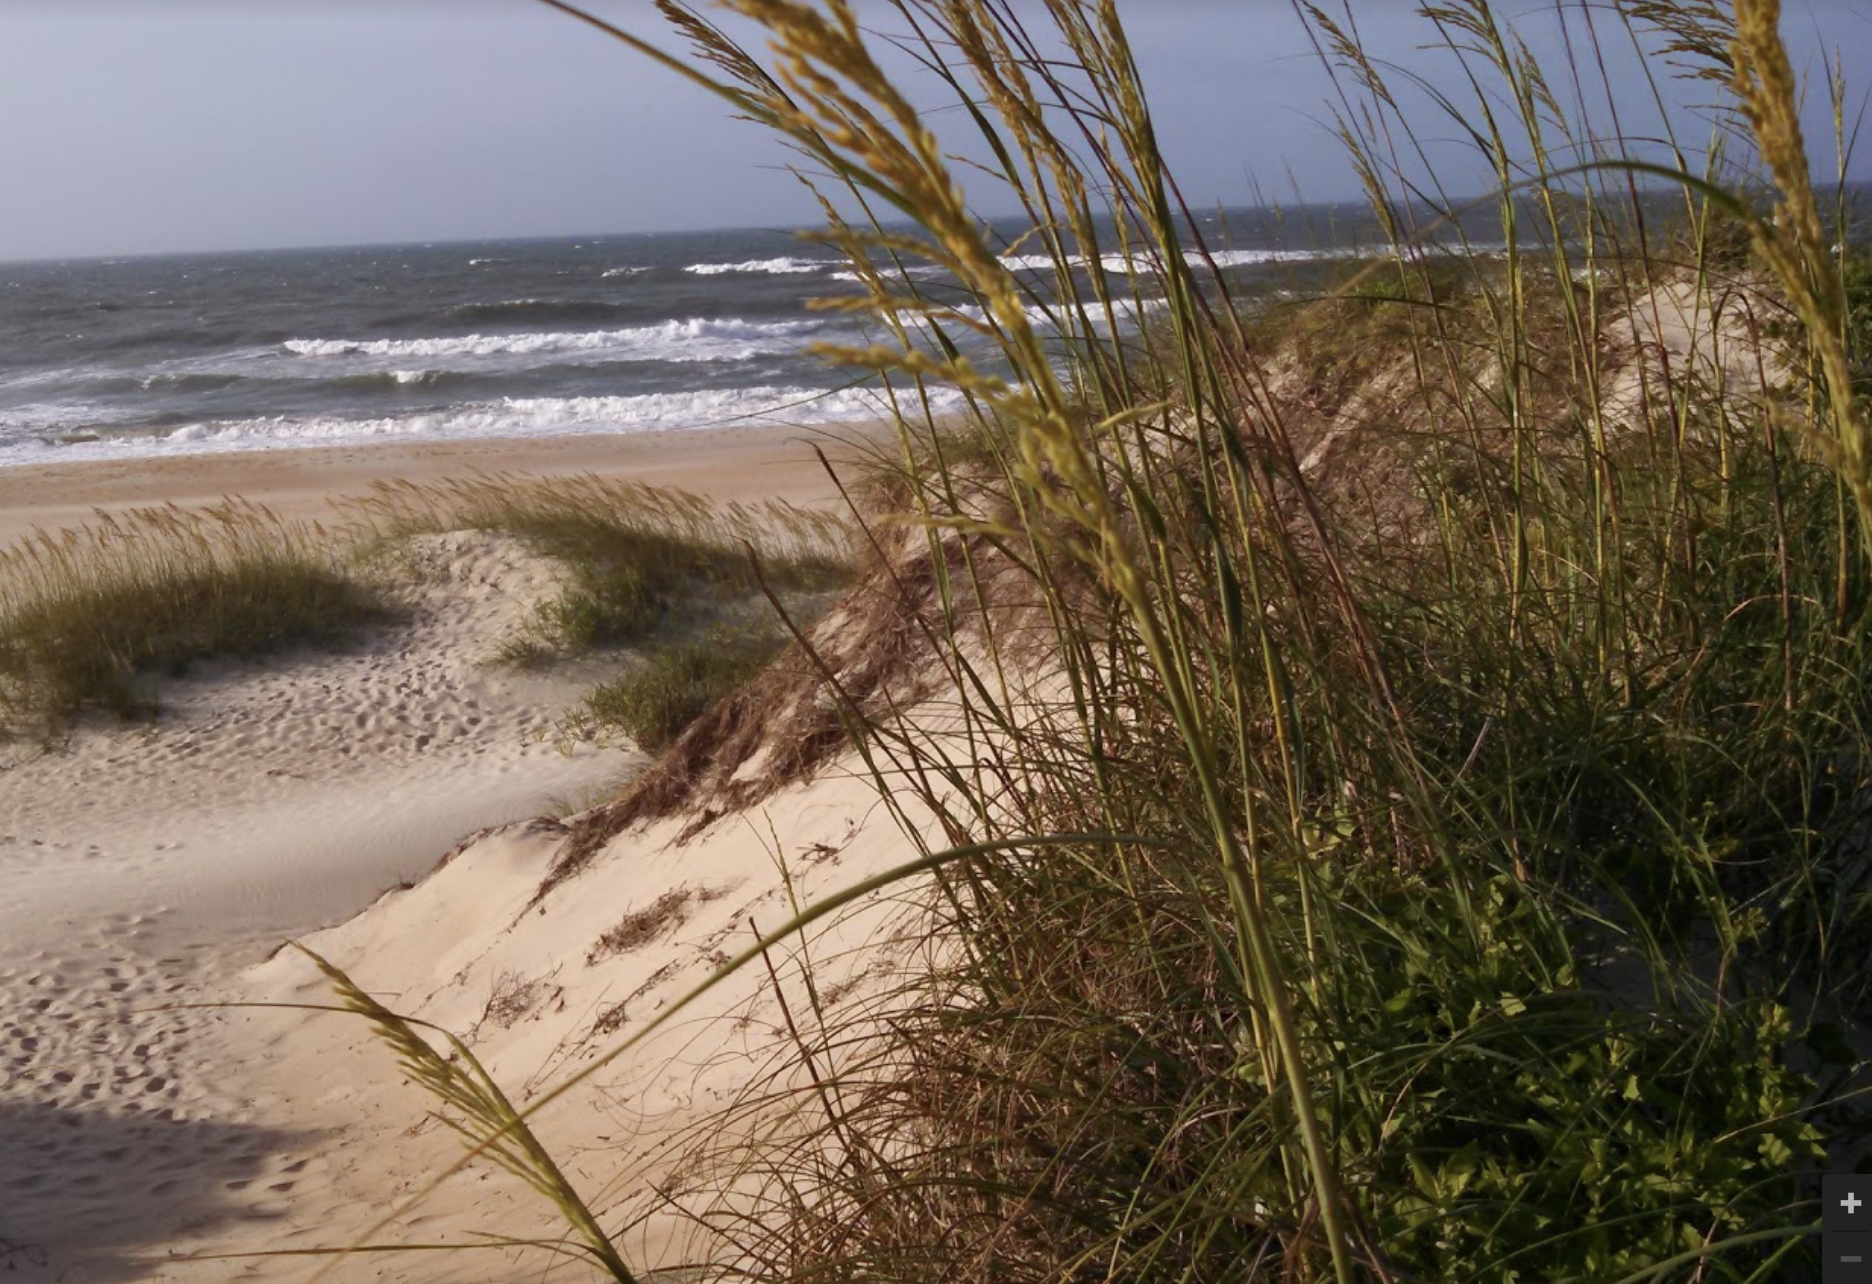 ocracoke dunes &amp; grass jerry deter